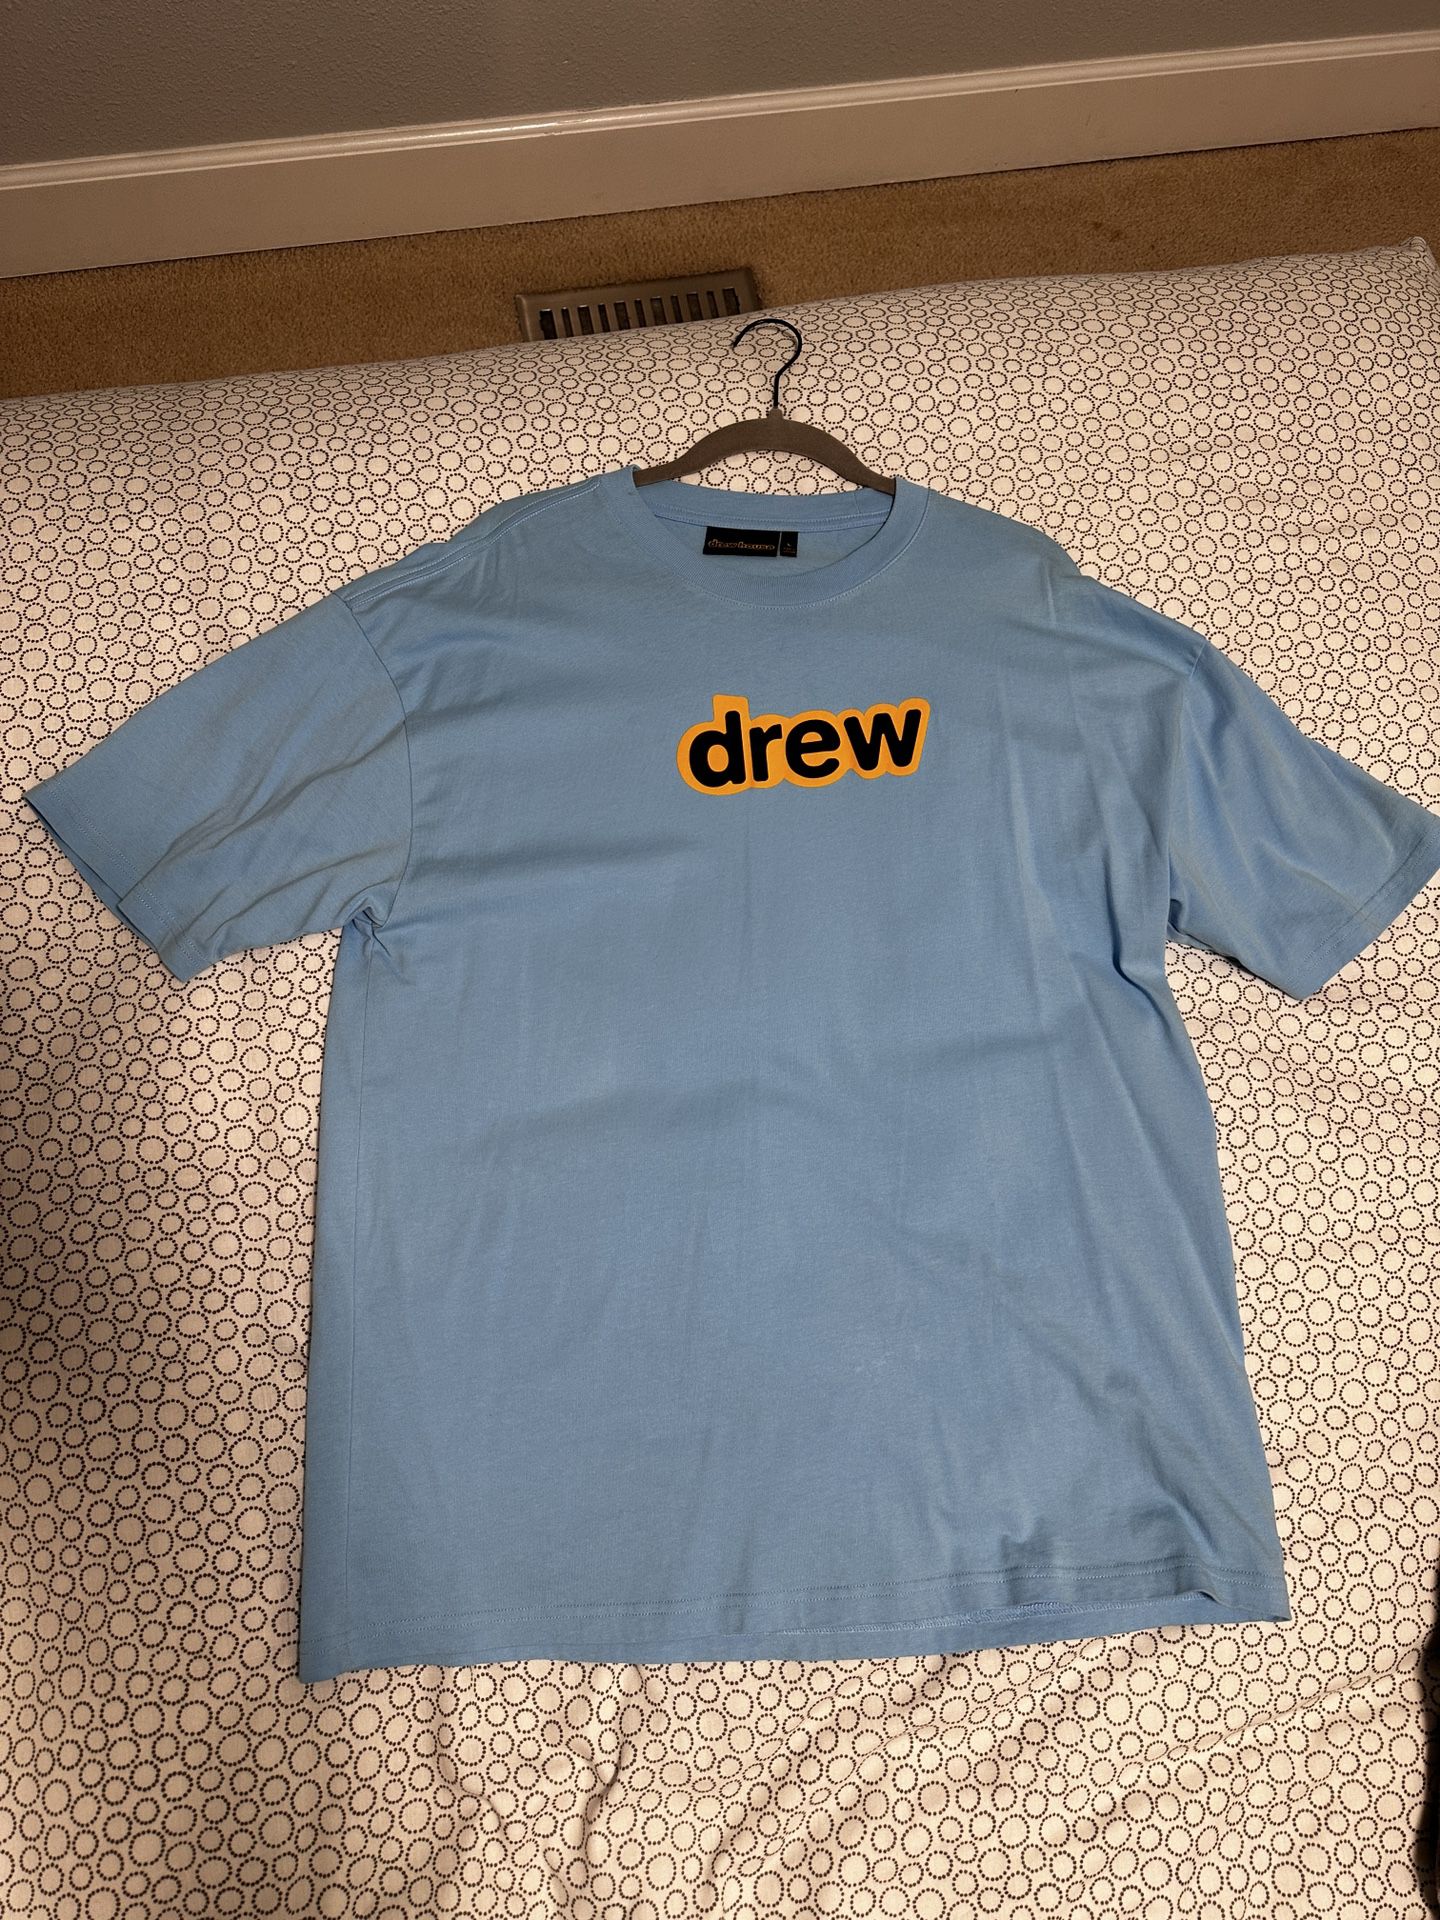 Drew T-Shirt Large